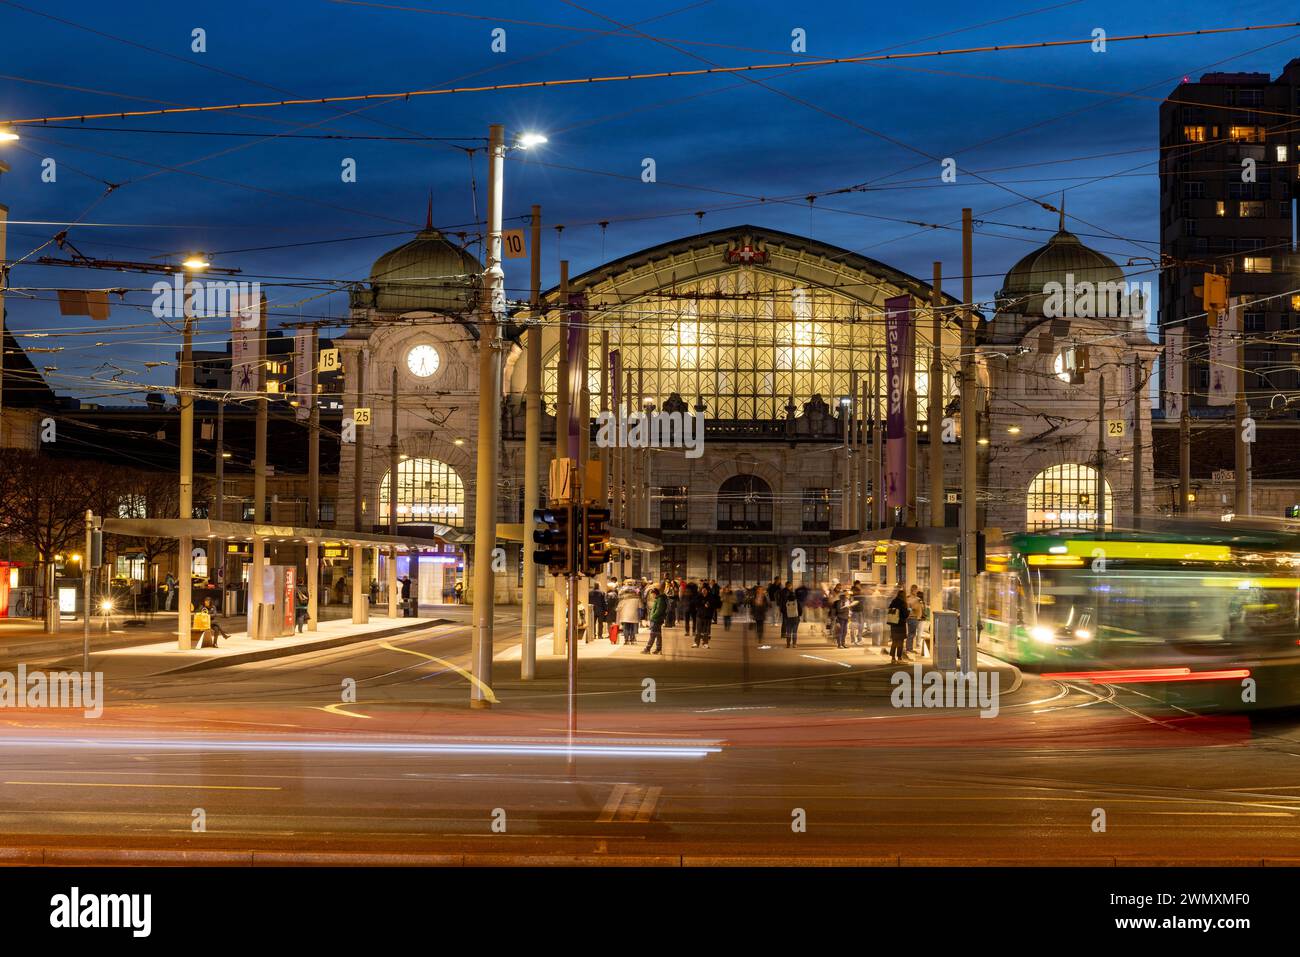 Evening atmosphere, Railway station building, SBB railway station, Centralbahnplatz, Basel, Canton of Basel-Stadt, Switzerland Stock Photo